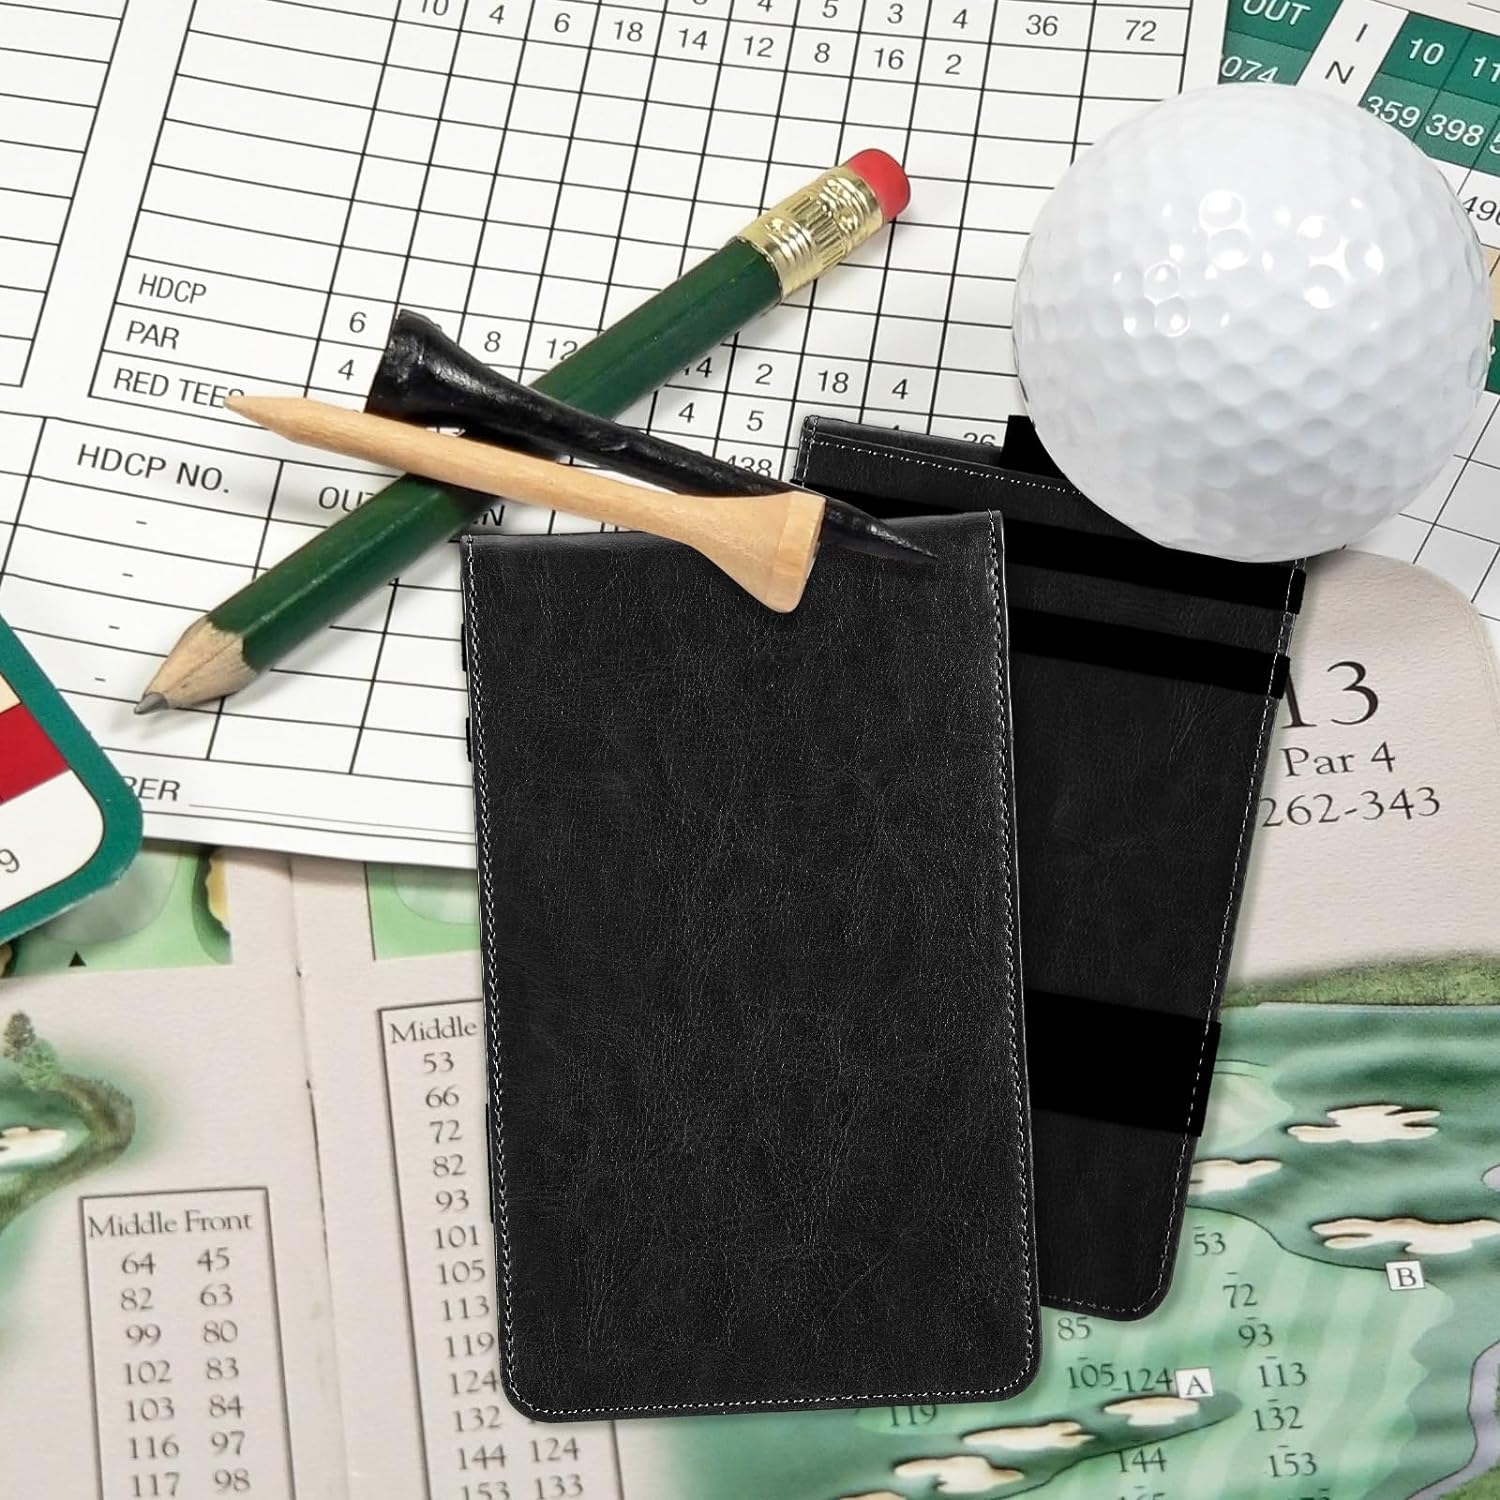 Honoson Golf Scorecard Holder PU Leather Golf Scorecard Holder Protector Gift Accessories 4.3 x 7 Inch 4 Pack